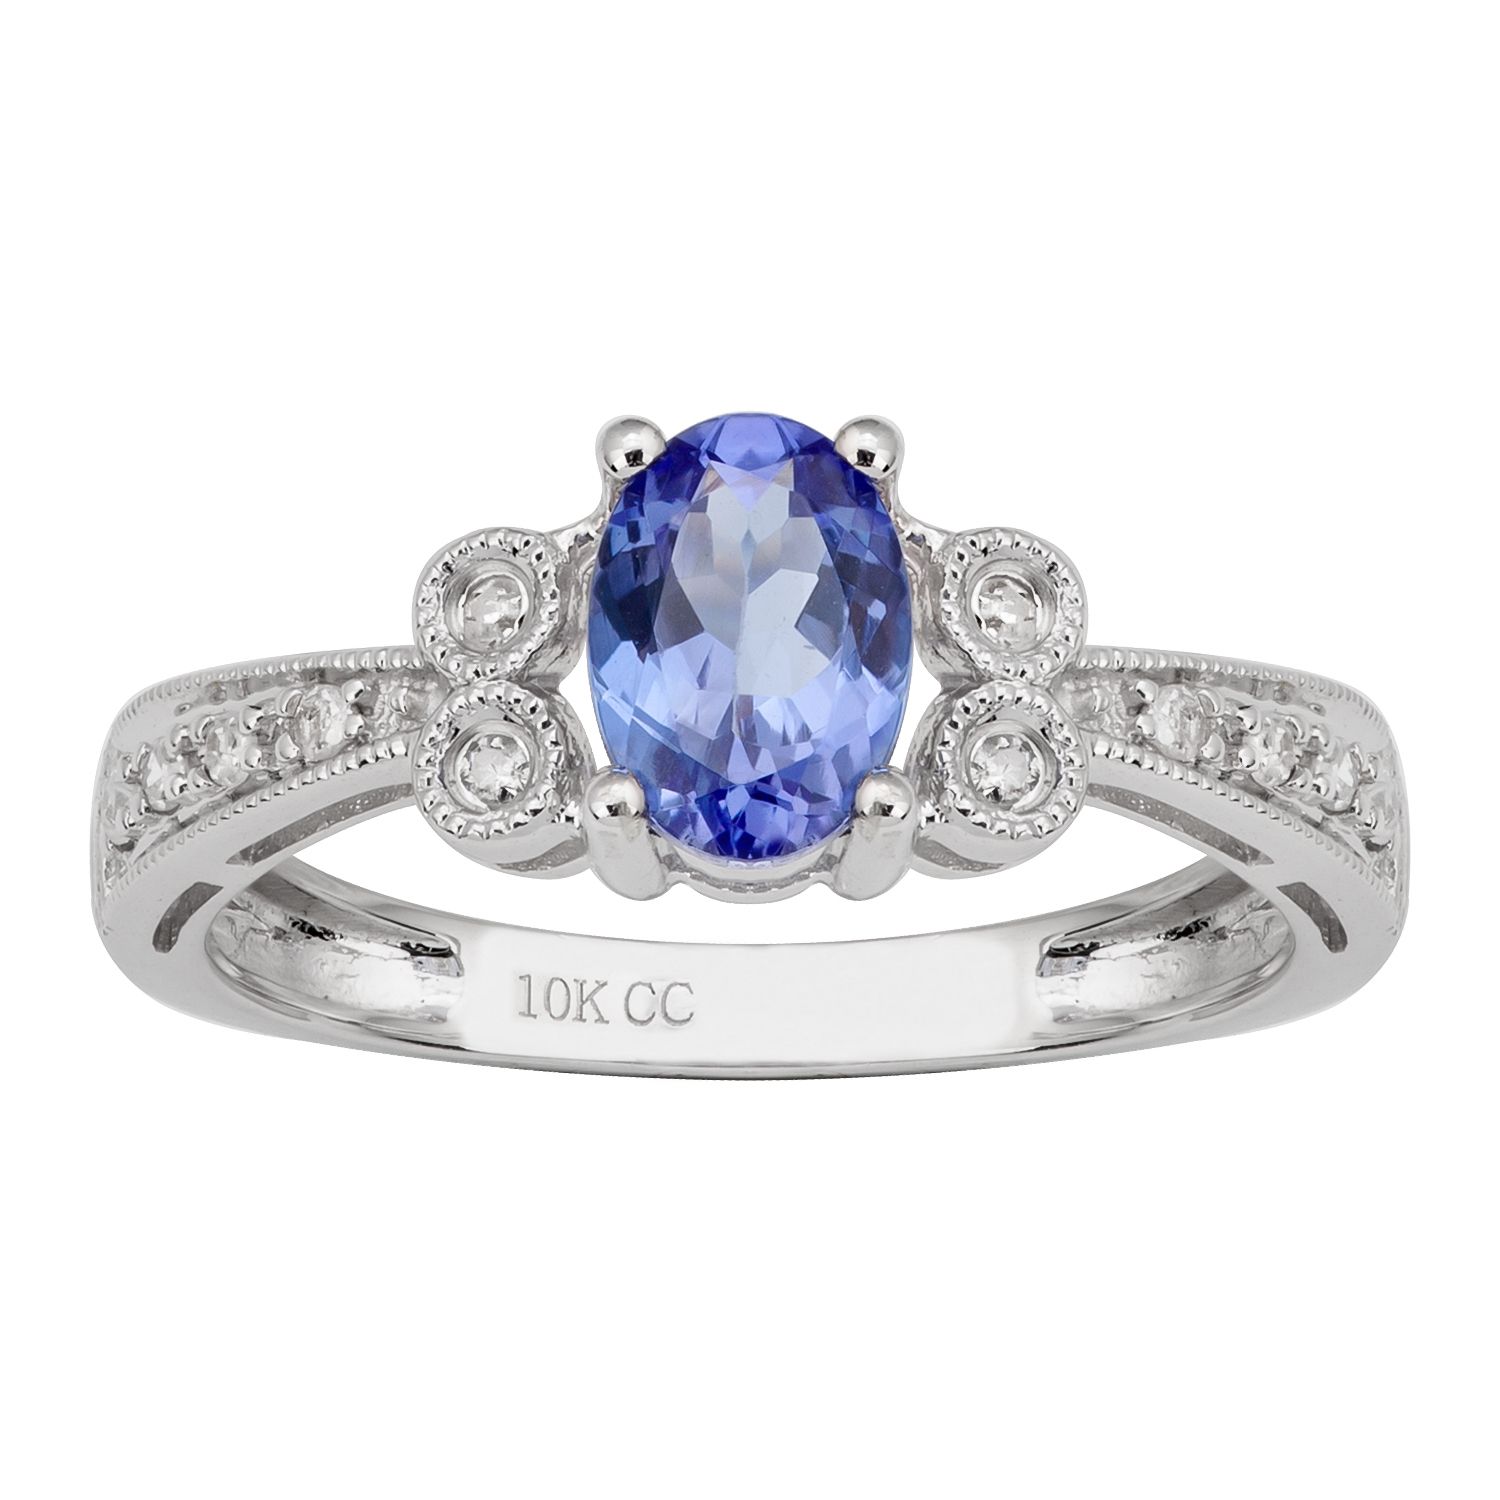 10k White Gold Vintage Style Oval Tanzanite And Diamond Ring Throughout 2020 Enhanced Blue Diamond Vintage Style Anniversary Bands In White Gold (View 5 of 25)